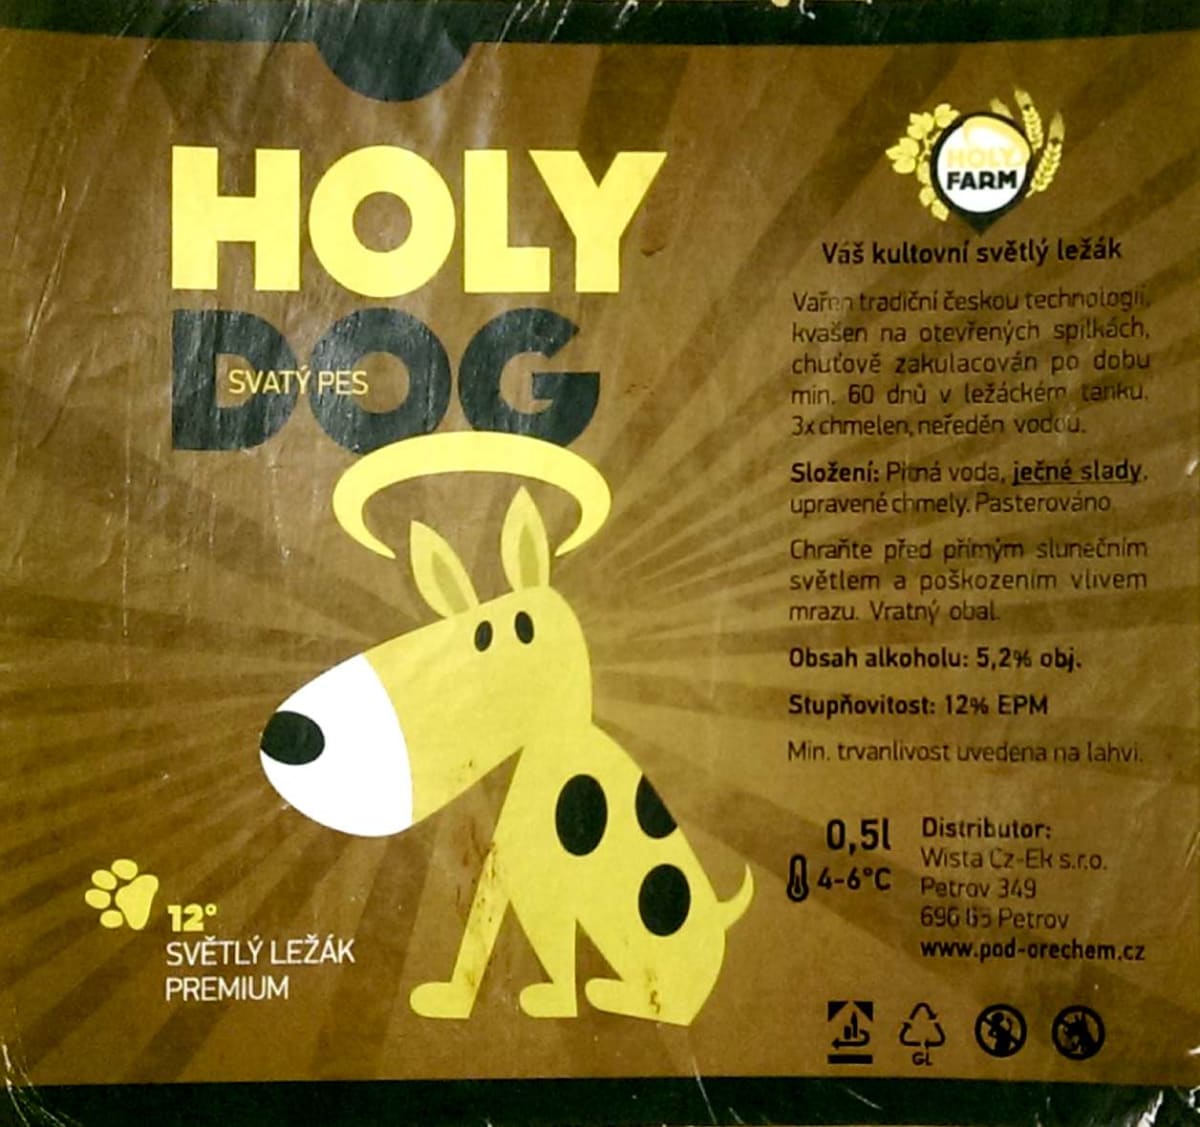 Holy Farm Holy Dog